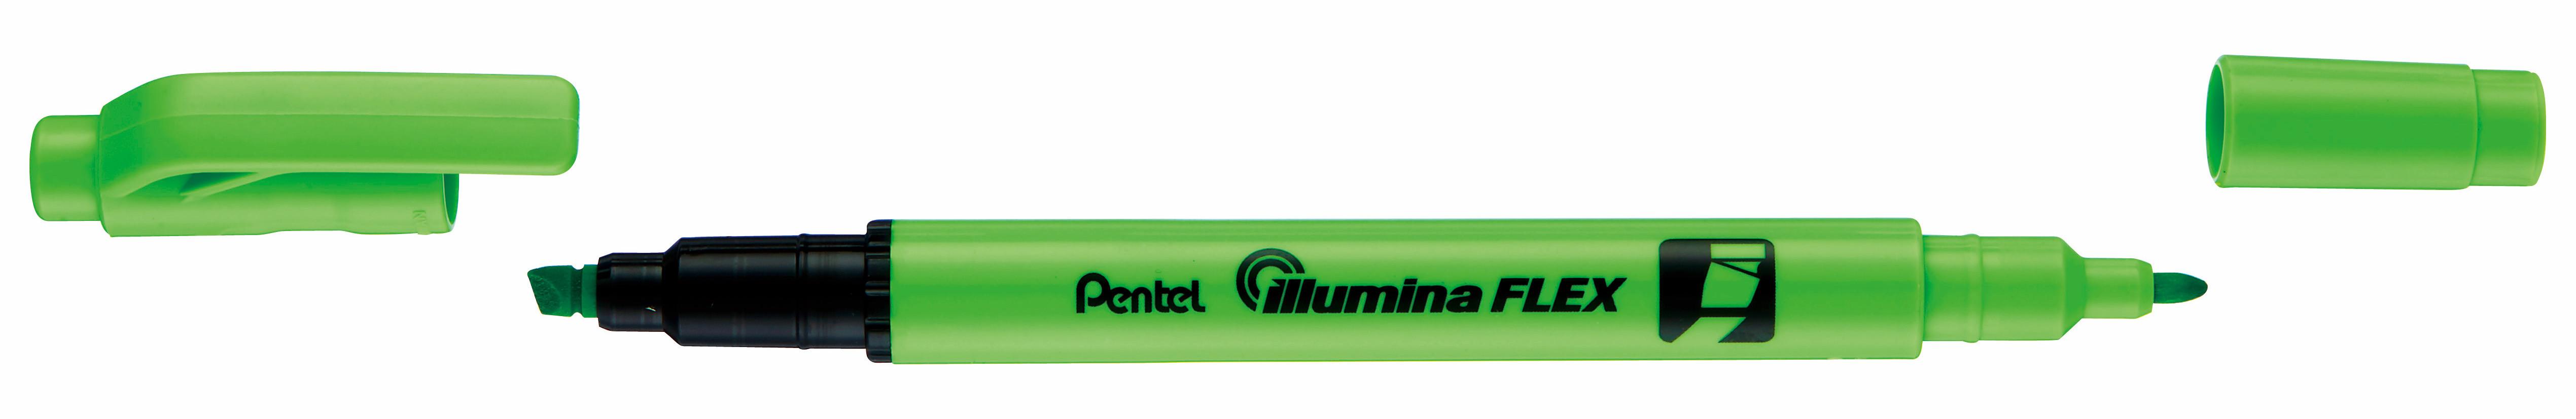 Pentel  Pentel Illumina Flex evidenziatore 1 pz Punta sottile/smussata Verde chiaro 